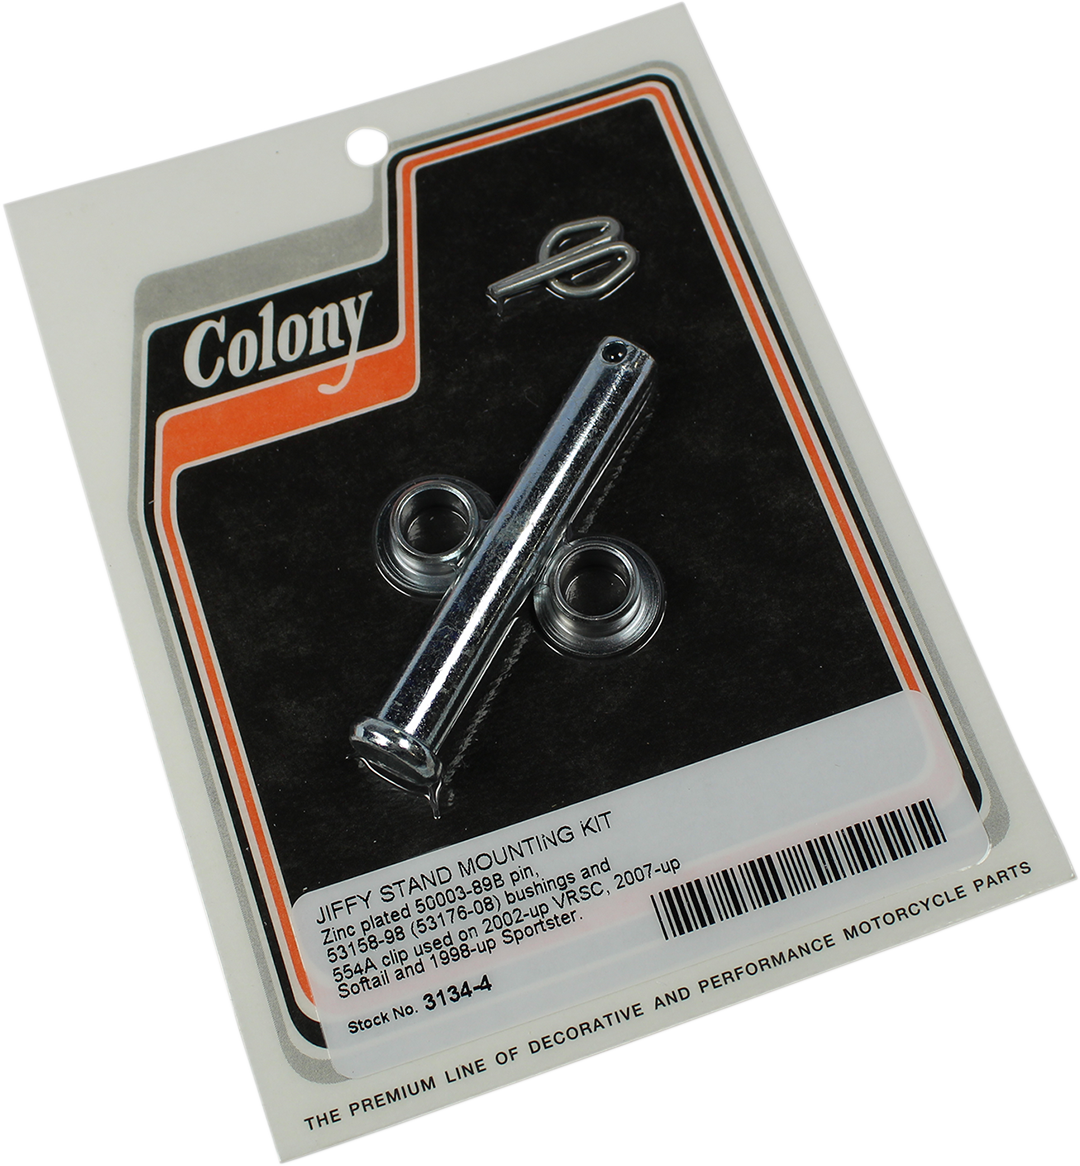 2401-1134 - COLONY Kick Stand Pin Kit 3134-4